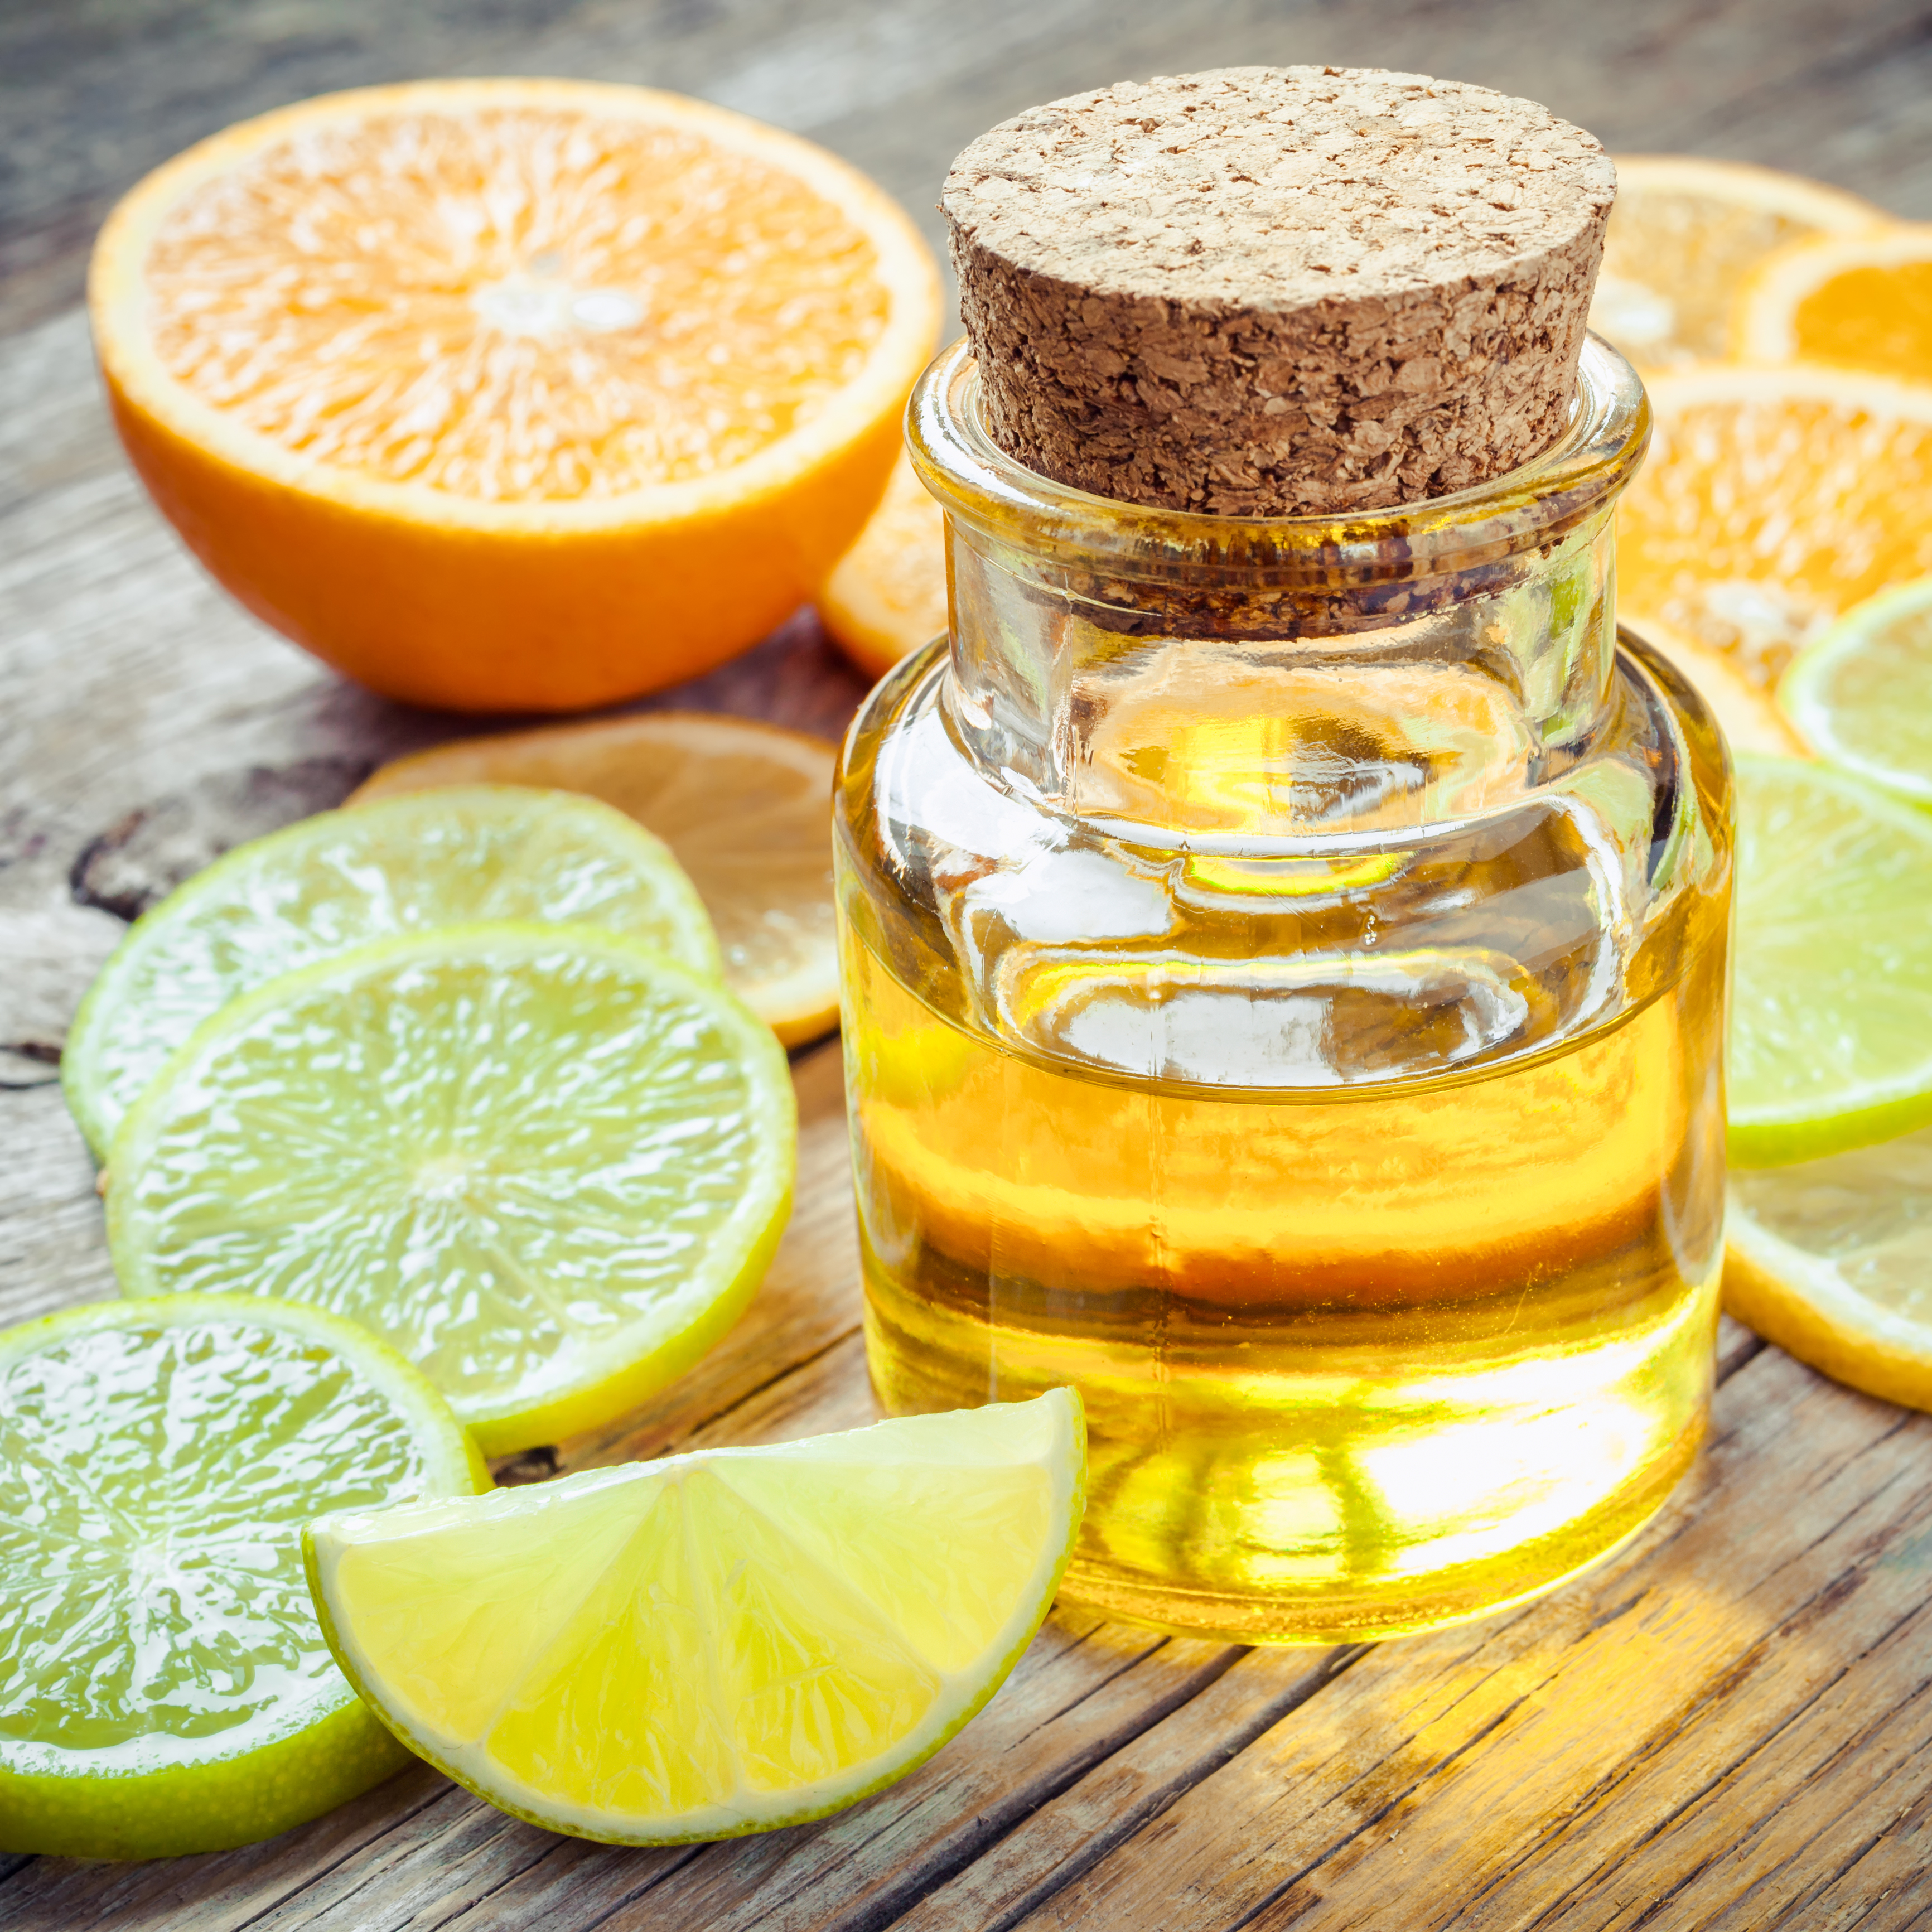 Citrus essential oil and slice of ripe fruits: orange, lemon and